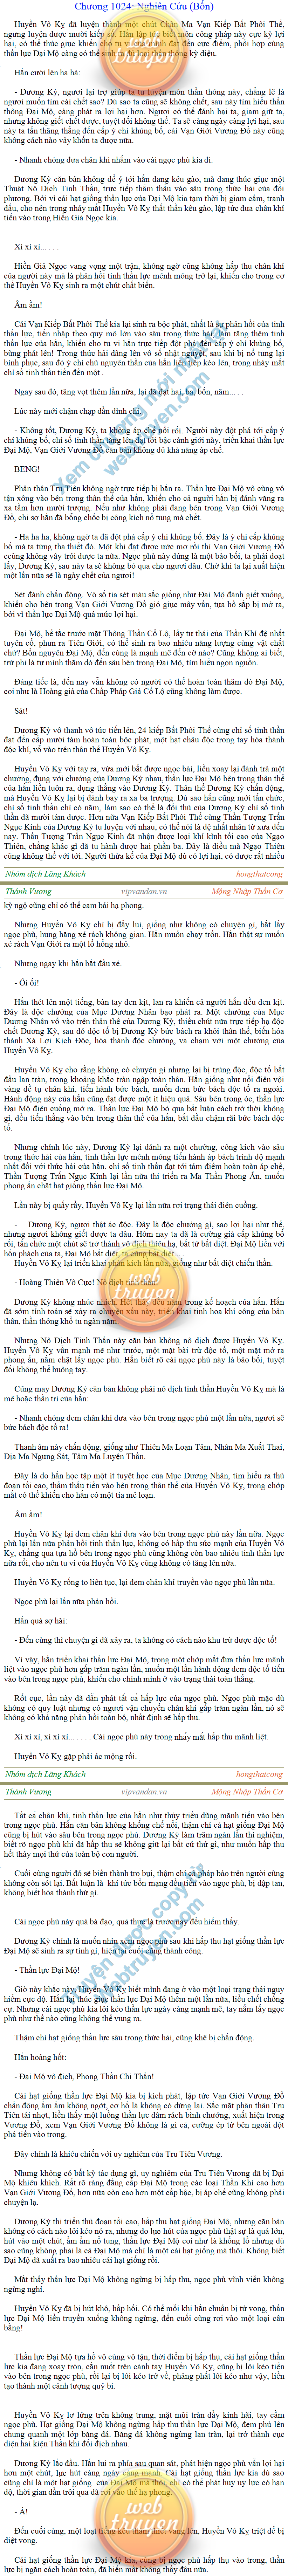 Thanh-vuong-1024.png